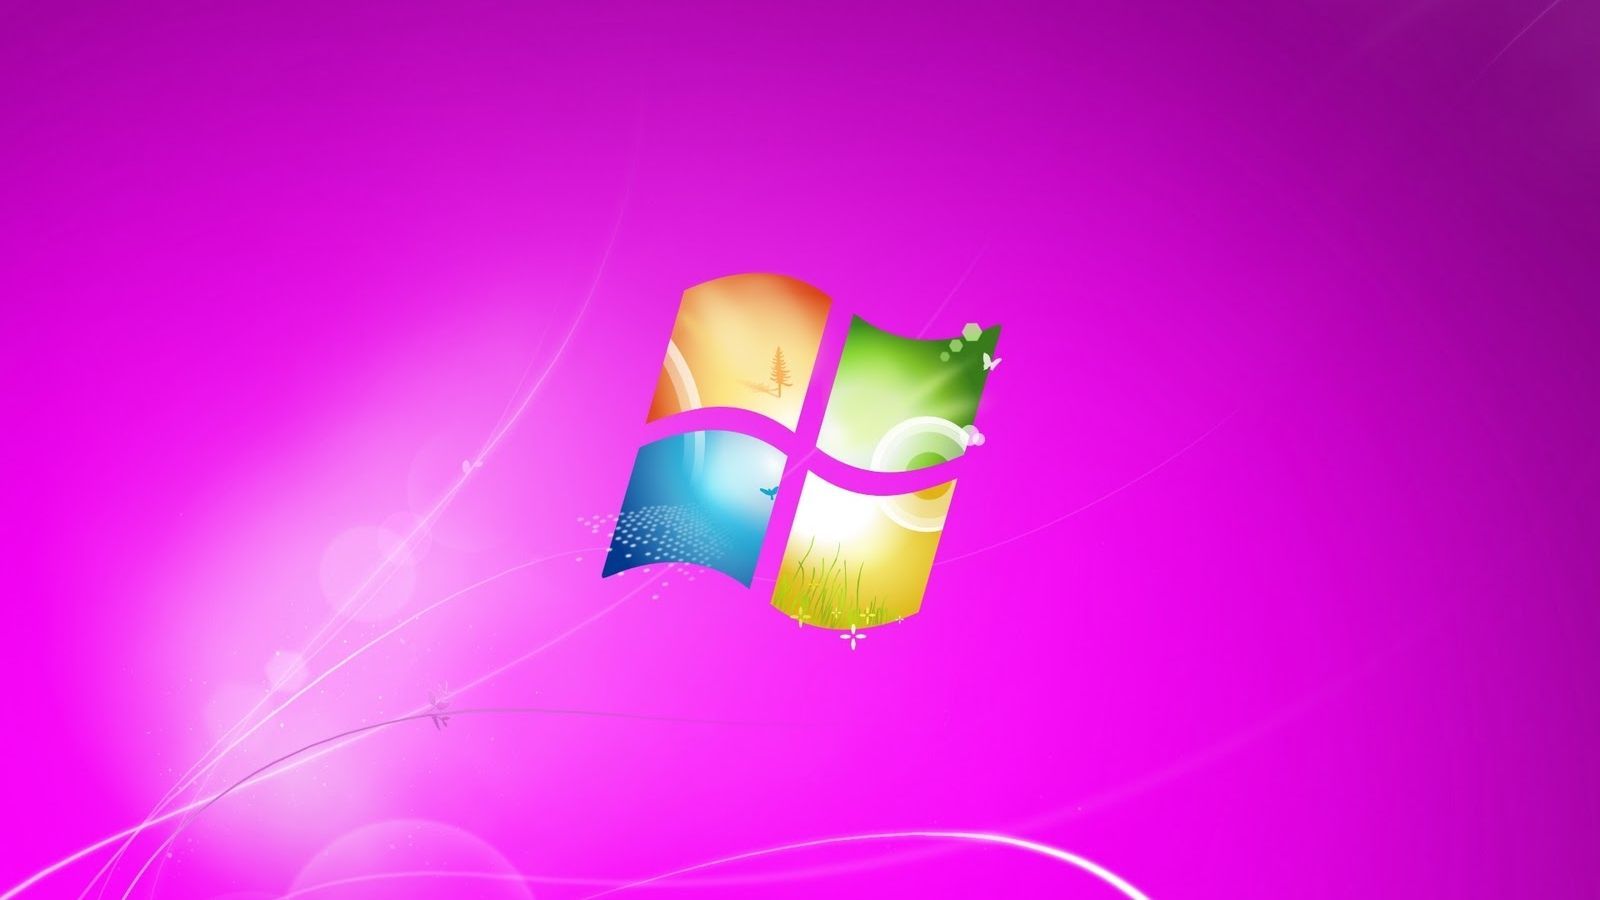  Windows Rosa Hintergrundbild 1600x900. Pink Windows 7 Wallpaper Free Pink Windows 7 Background